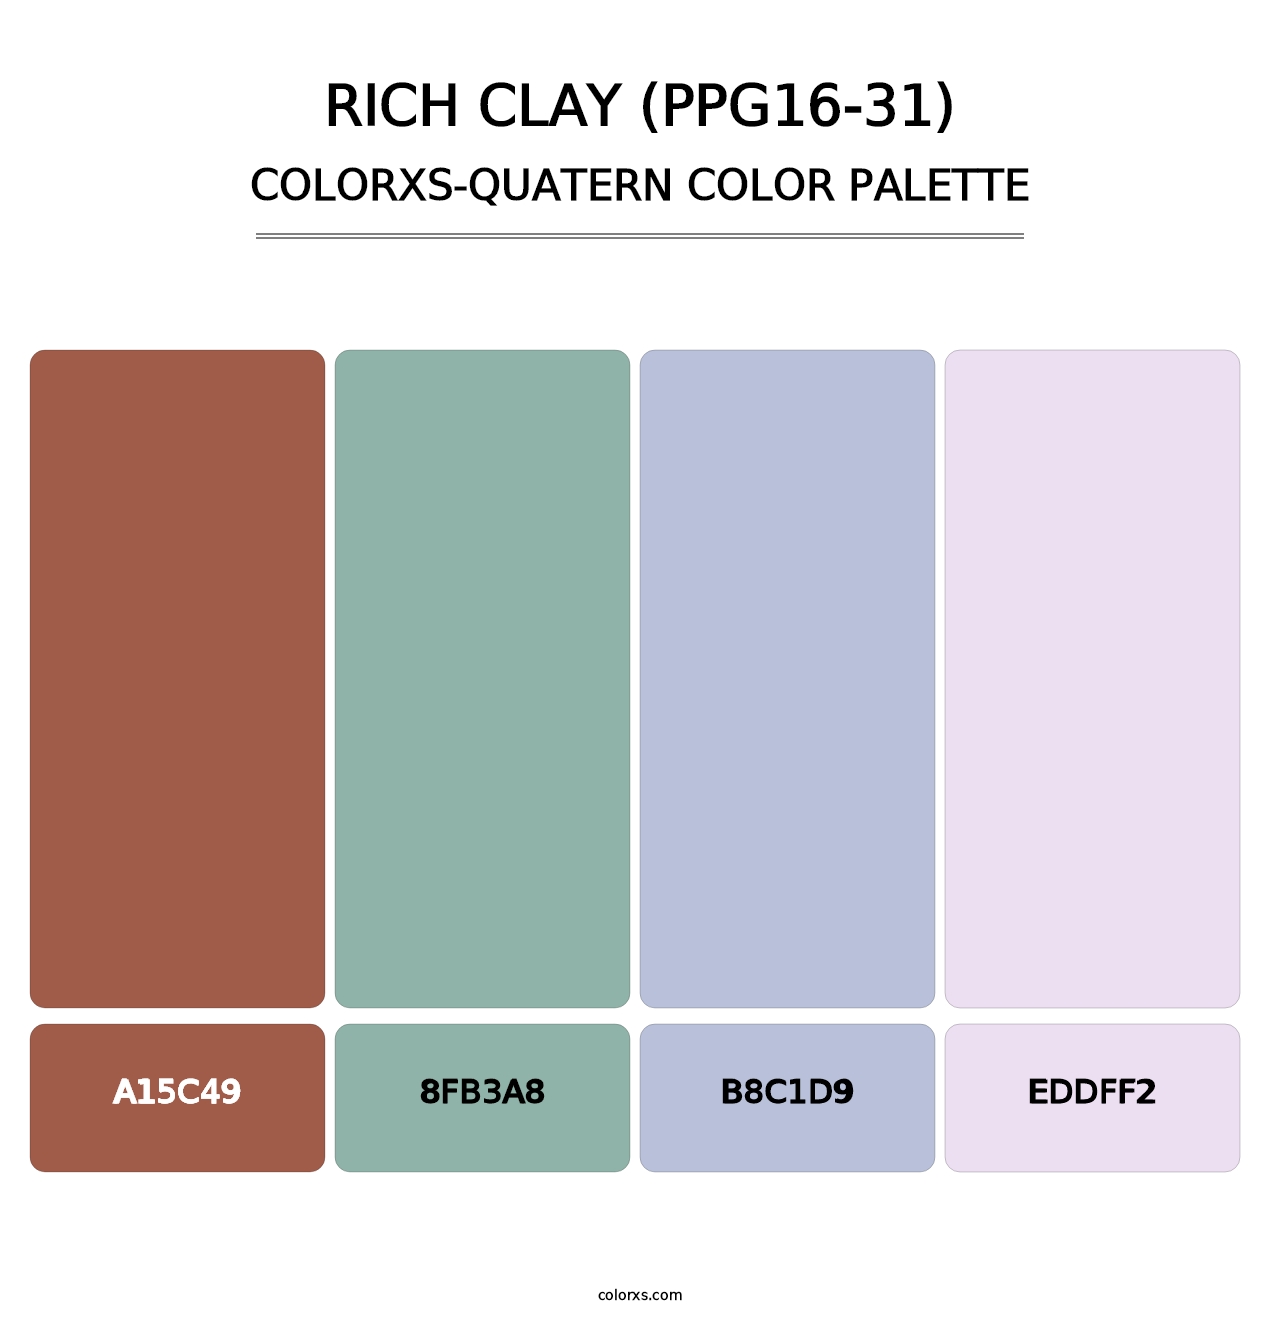 Rich Clay (PPG16-31) - Colorxs Quatern Palette